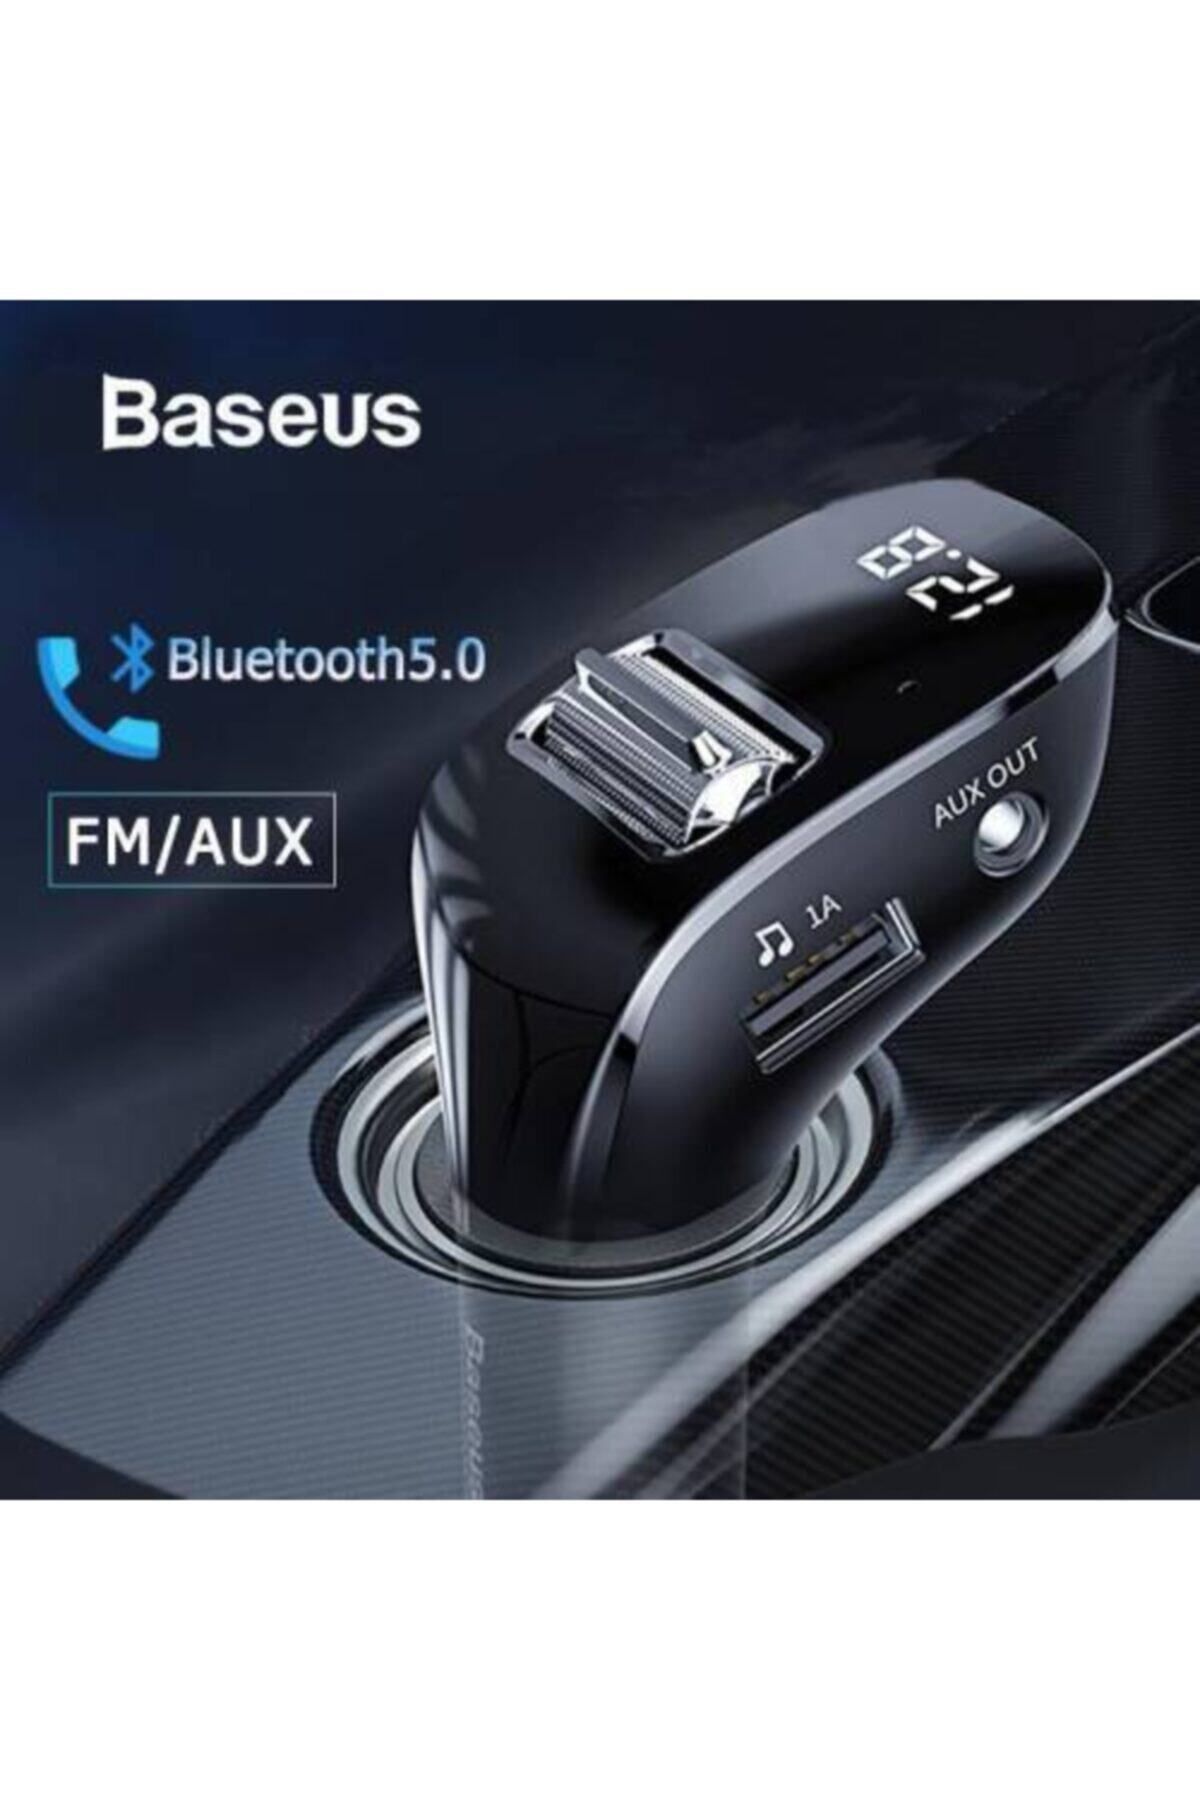 Baseus Bluetooth Araç Şarjı Mp3 Fm Transmitter Araç Müzik Adaptörü Çift Usb Aux, Flash Müzik Dinleme